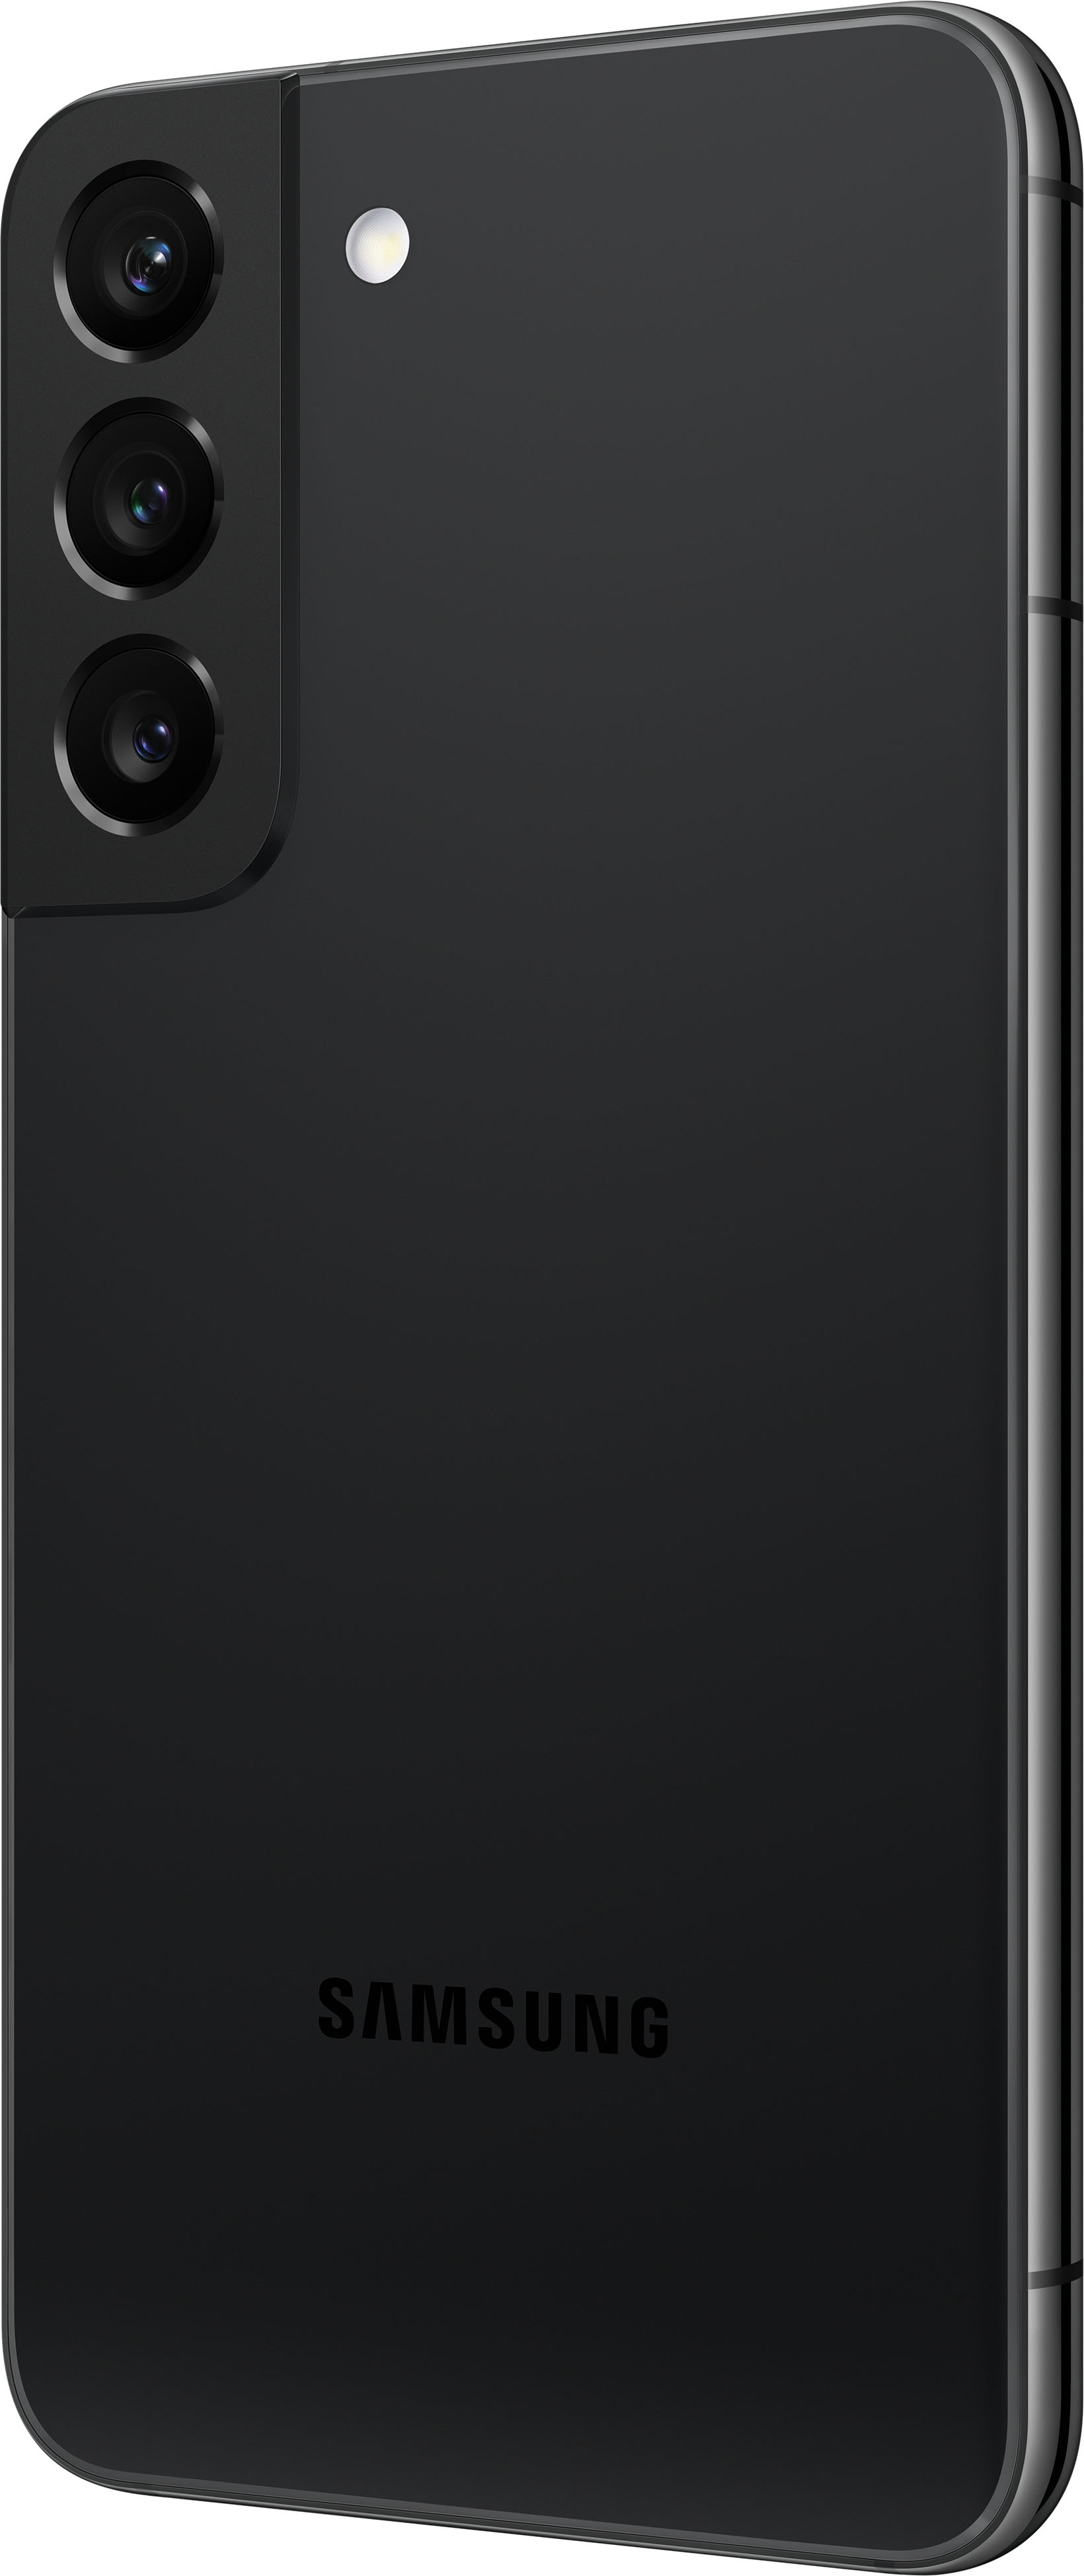 Samsung Galaxy S22 Ultra 256GB Factory Unlocked (Phantom Black) Cellphone 